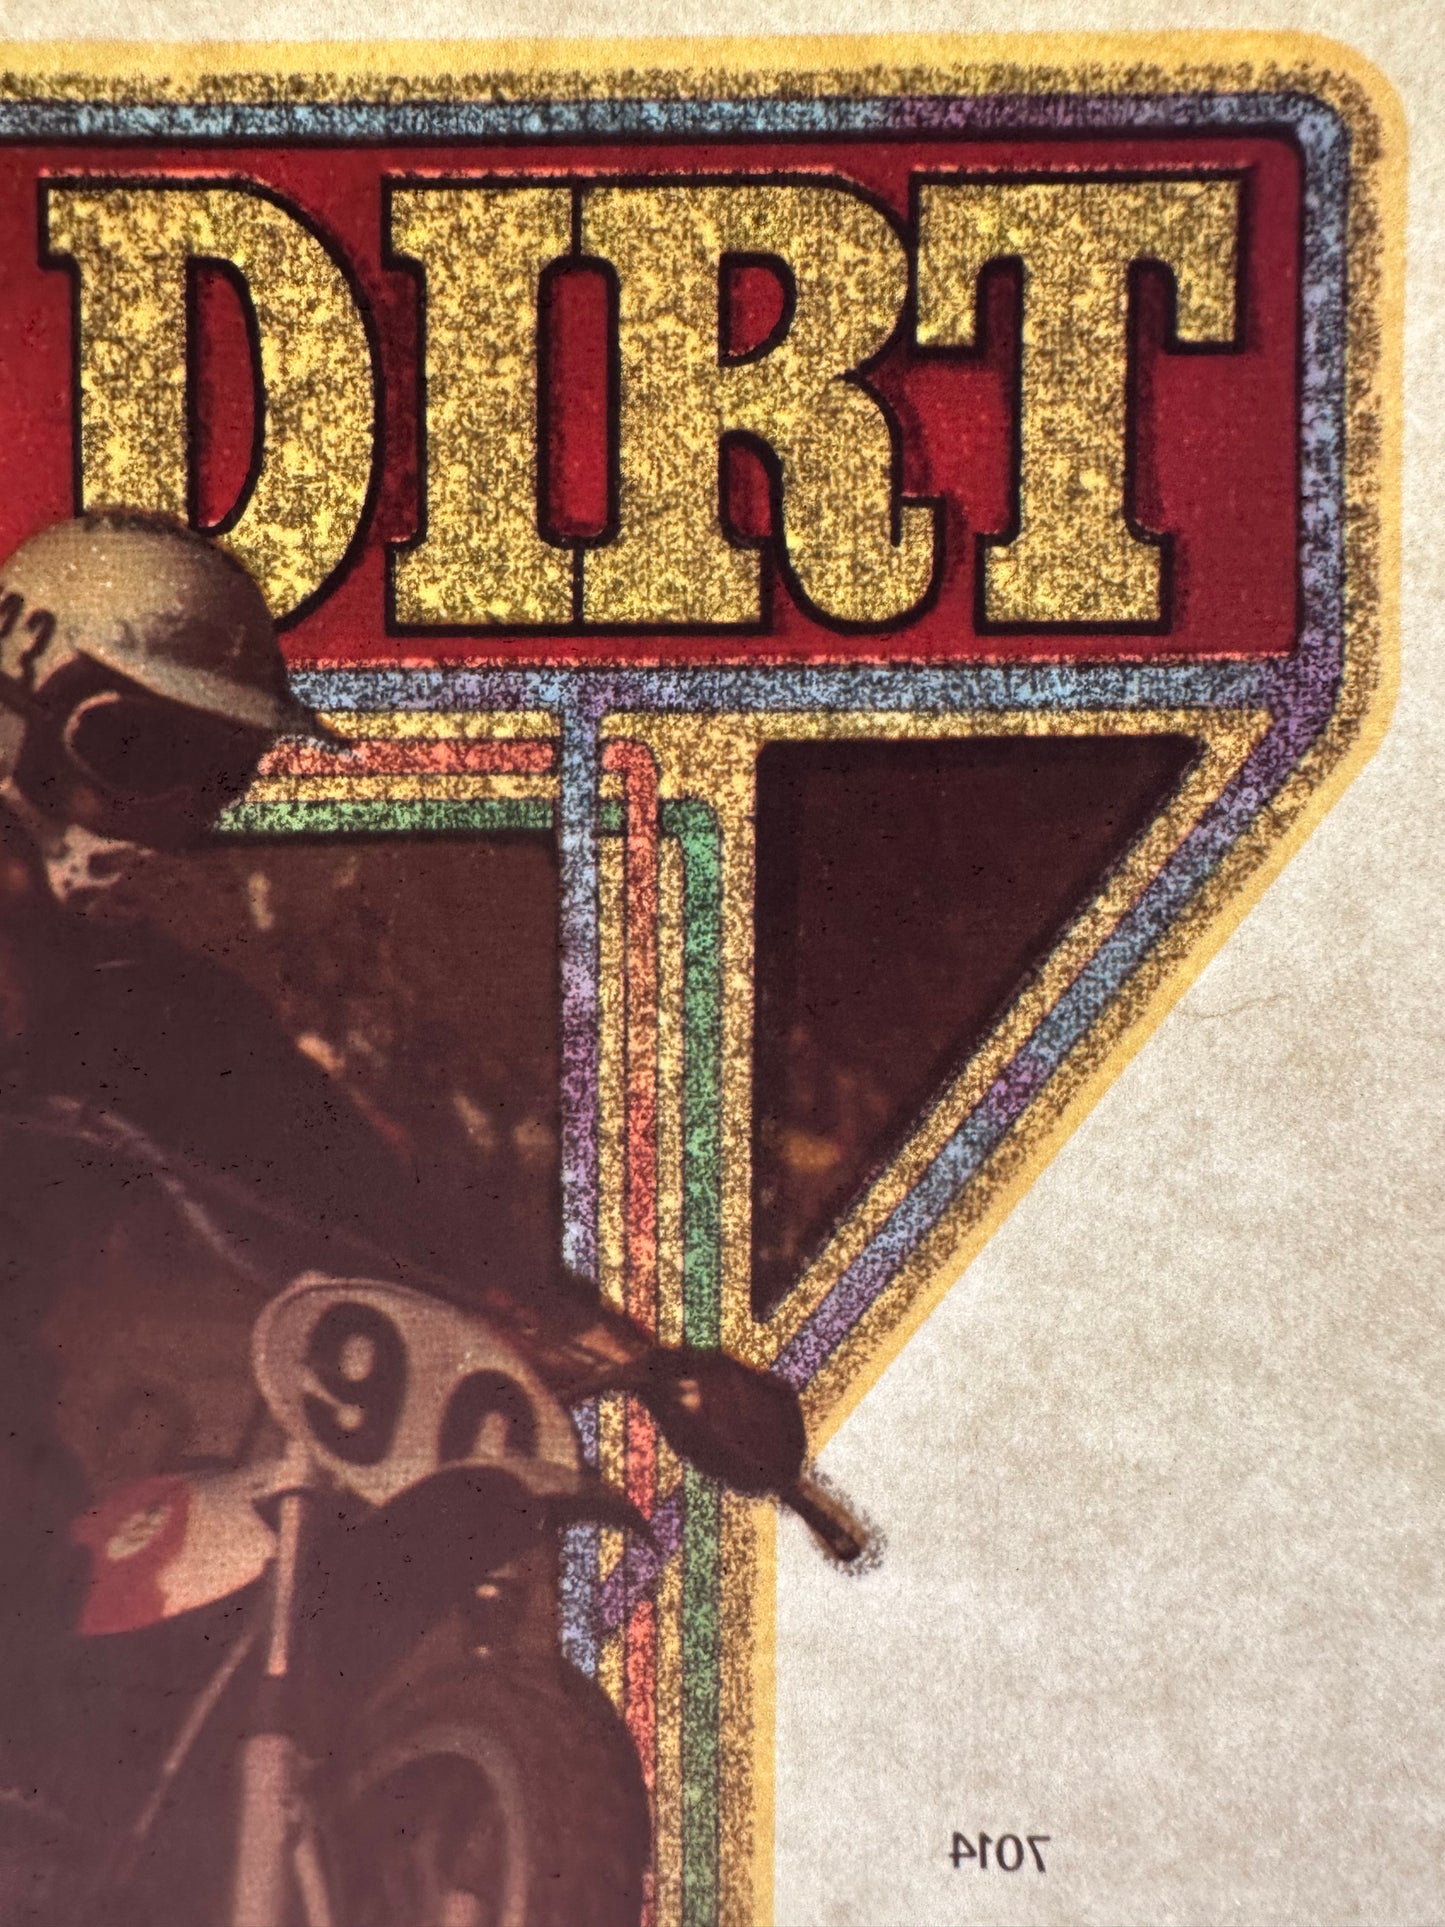 Eat My Dirt Motocross Vintage Iron On Heat Transfer